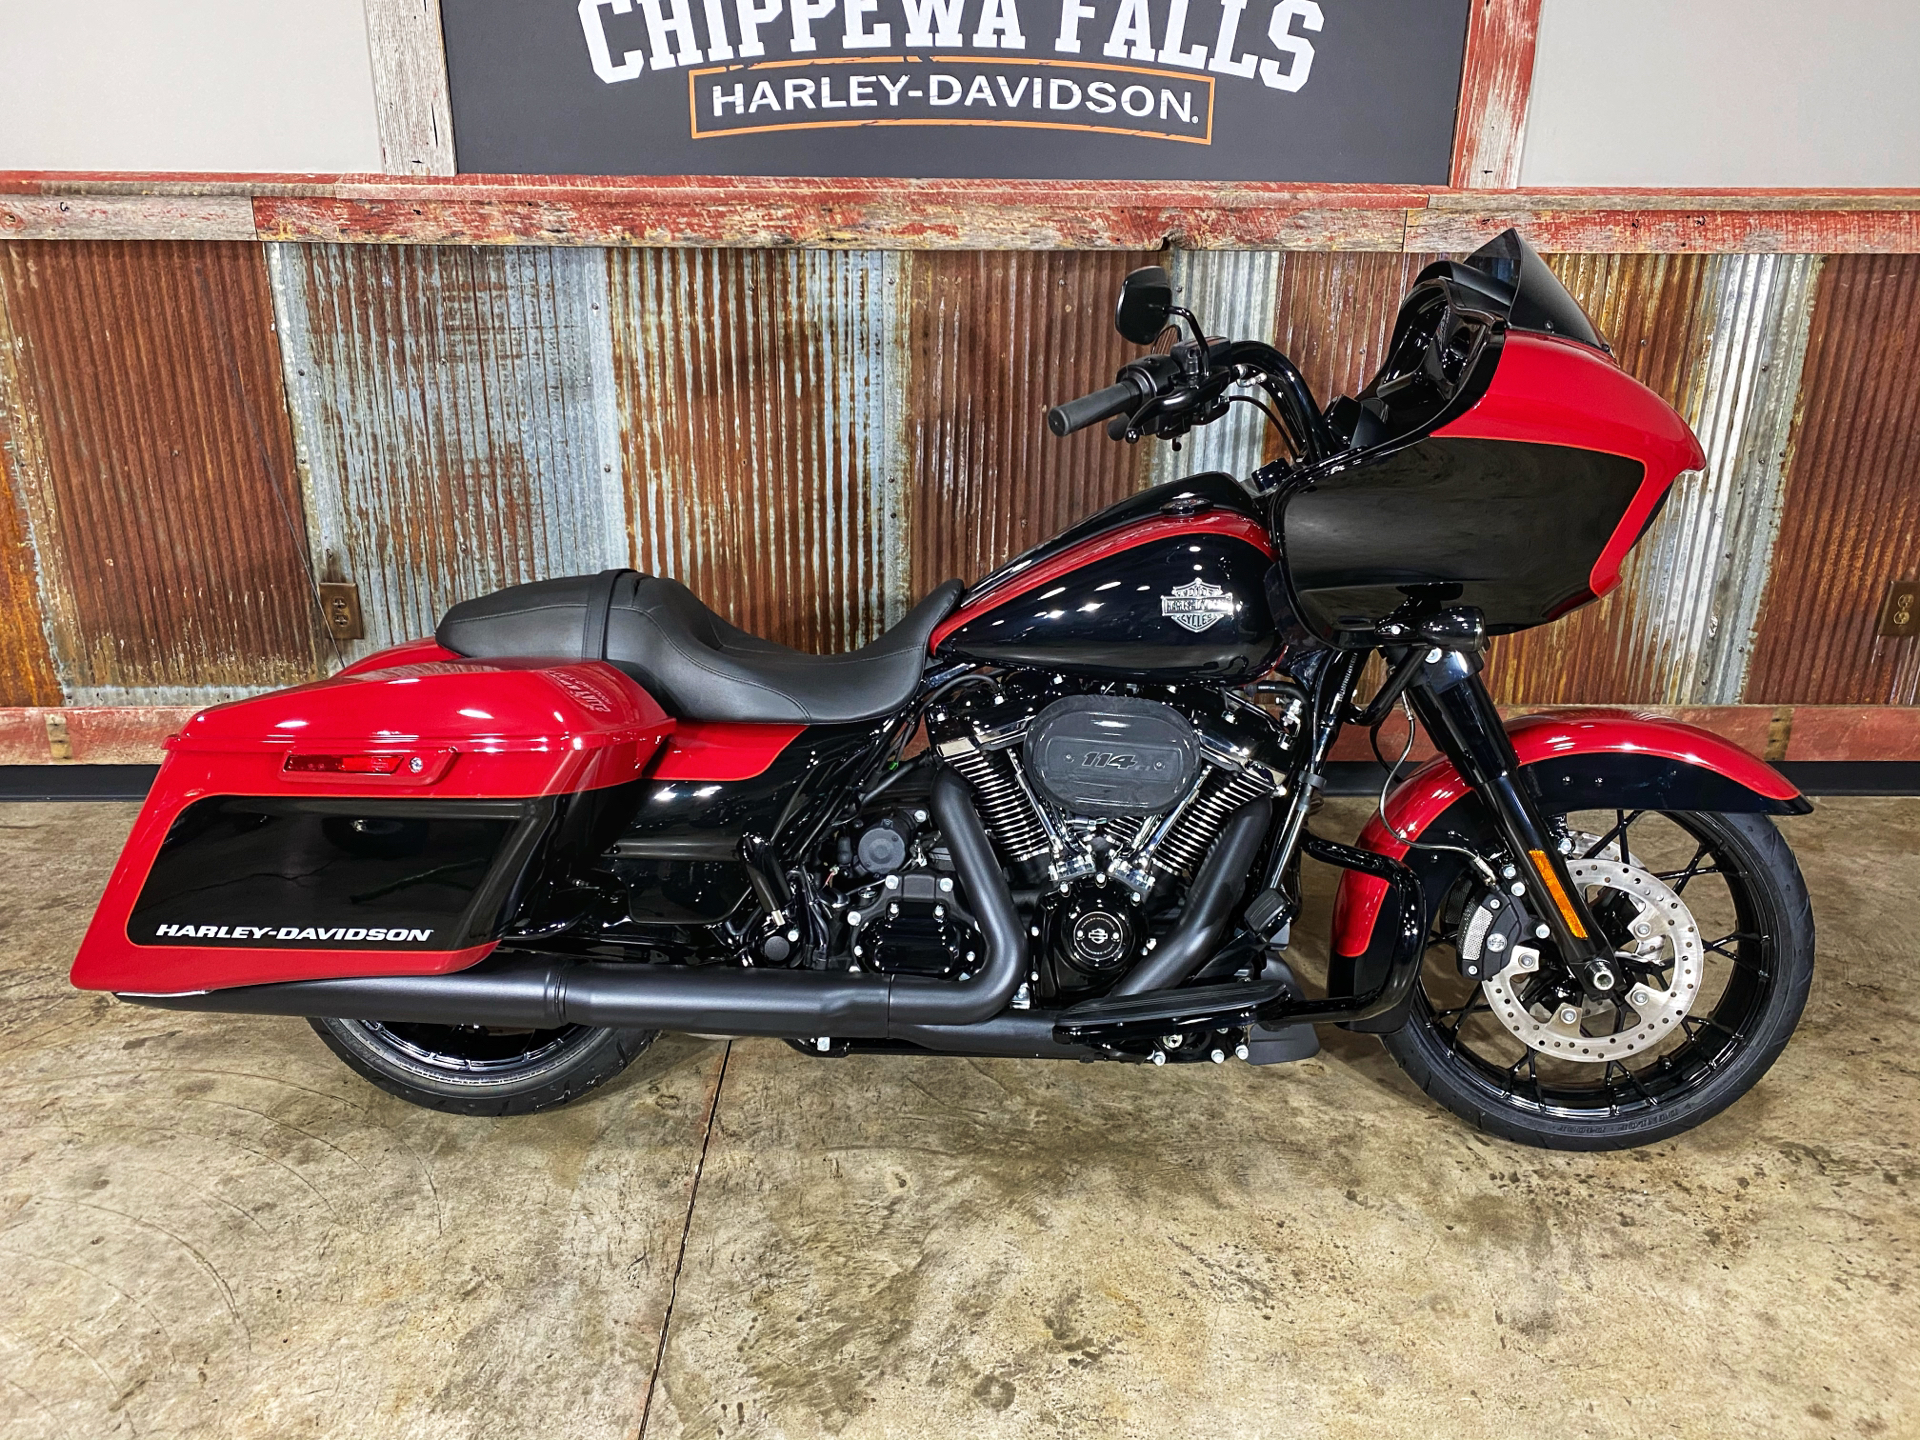 New 2021 Harley Davidson Road Glide Special Billiard Red Vivid Black Black Pearl Option Motorcycles In Chippewa Falls Wi Fl604756